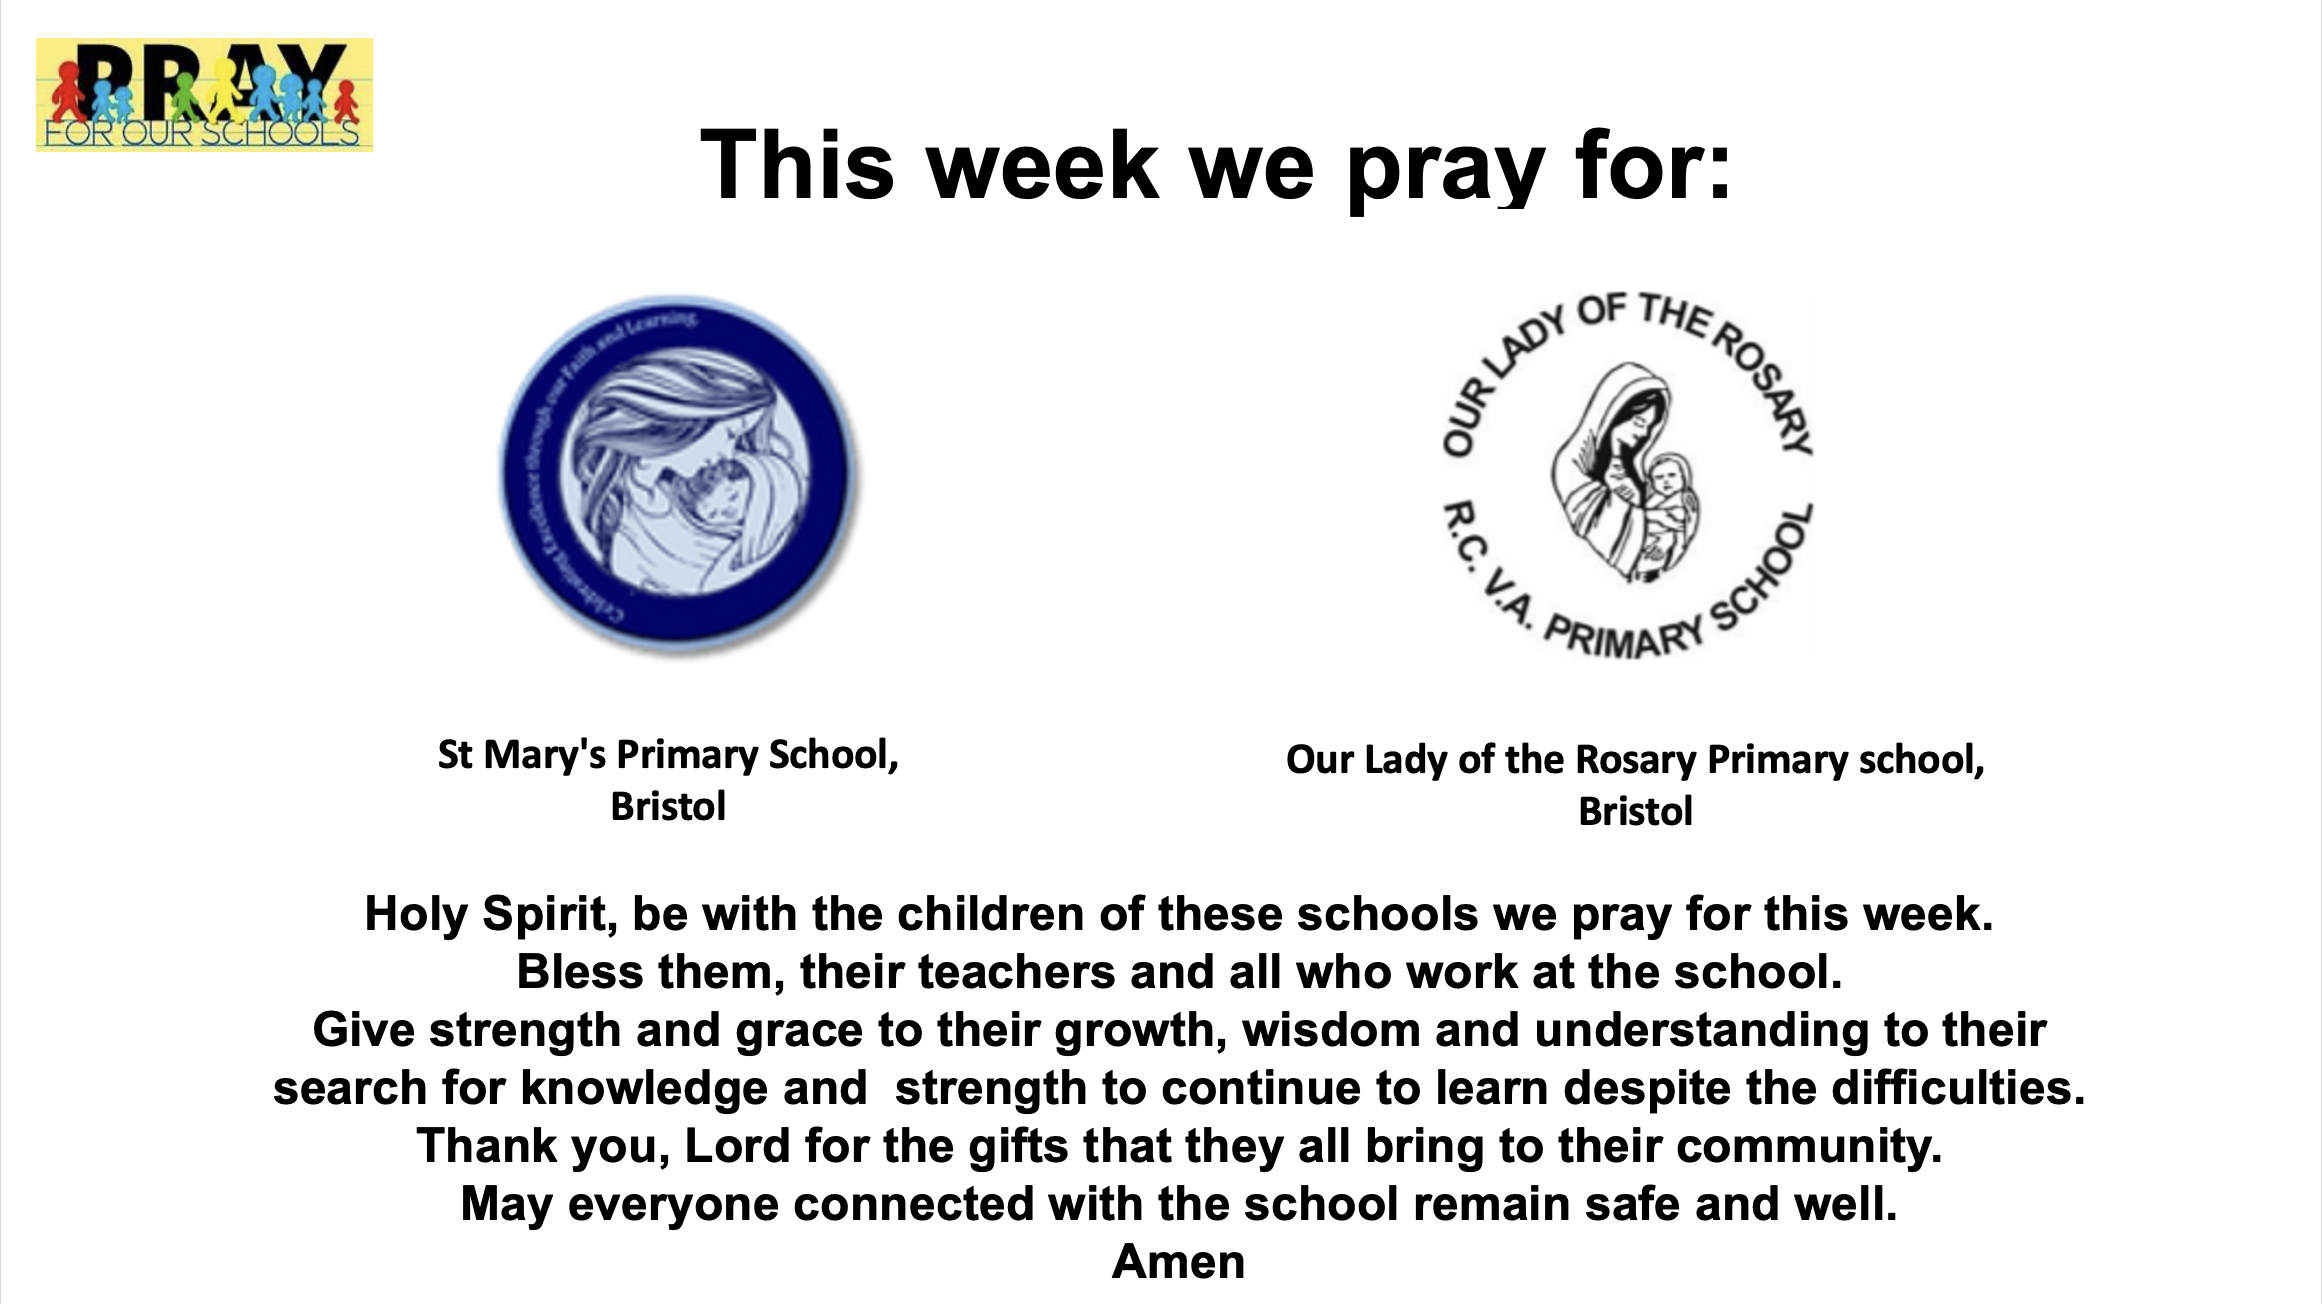 This week we pray for: St Edward's School, Cheltenham and St Peter's Catholic School, Gloucester